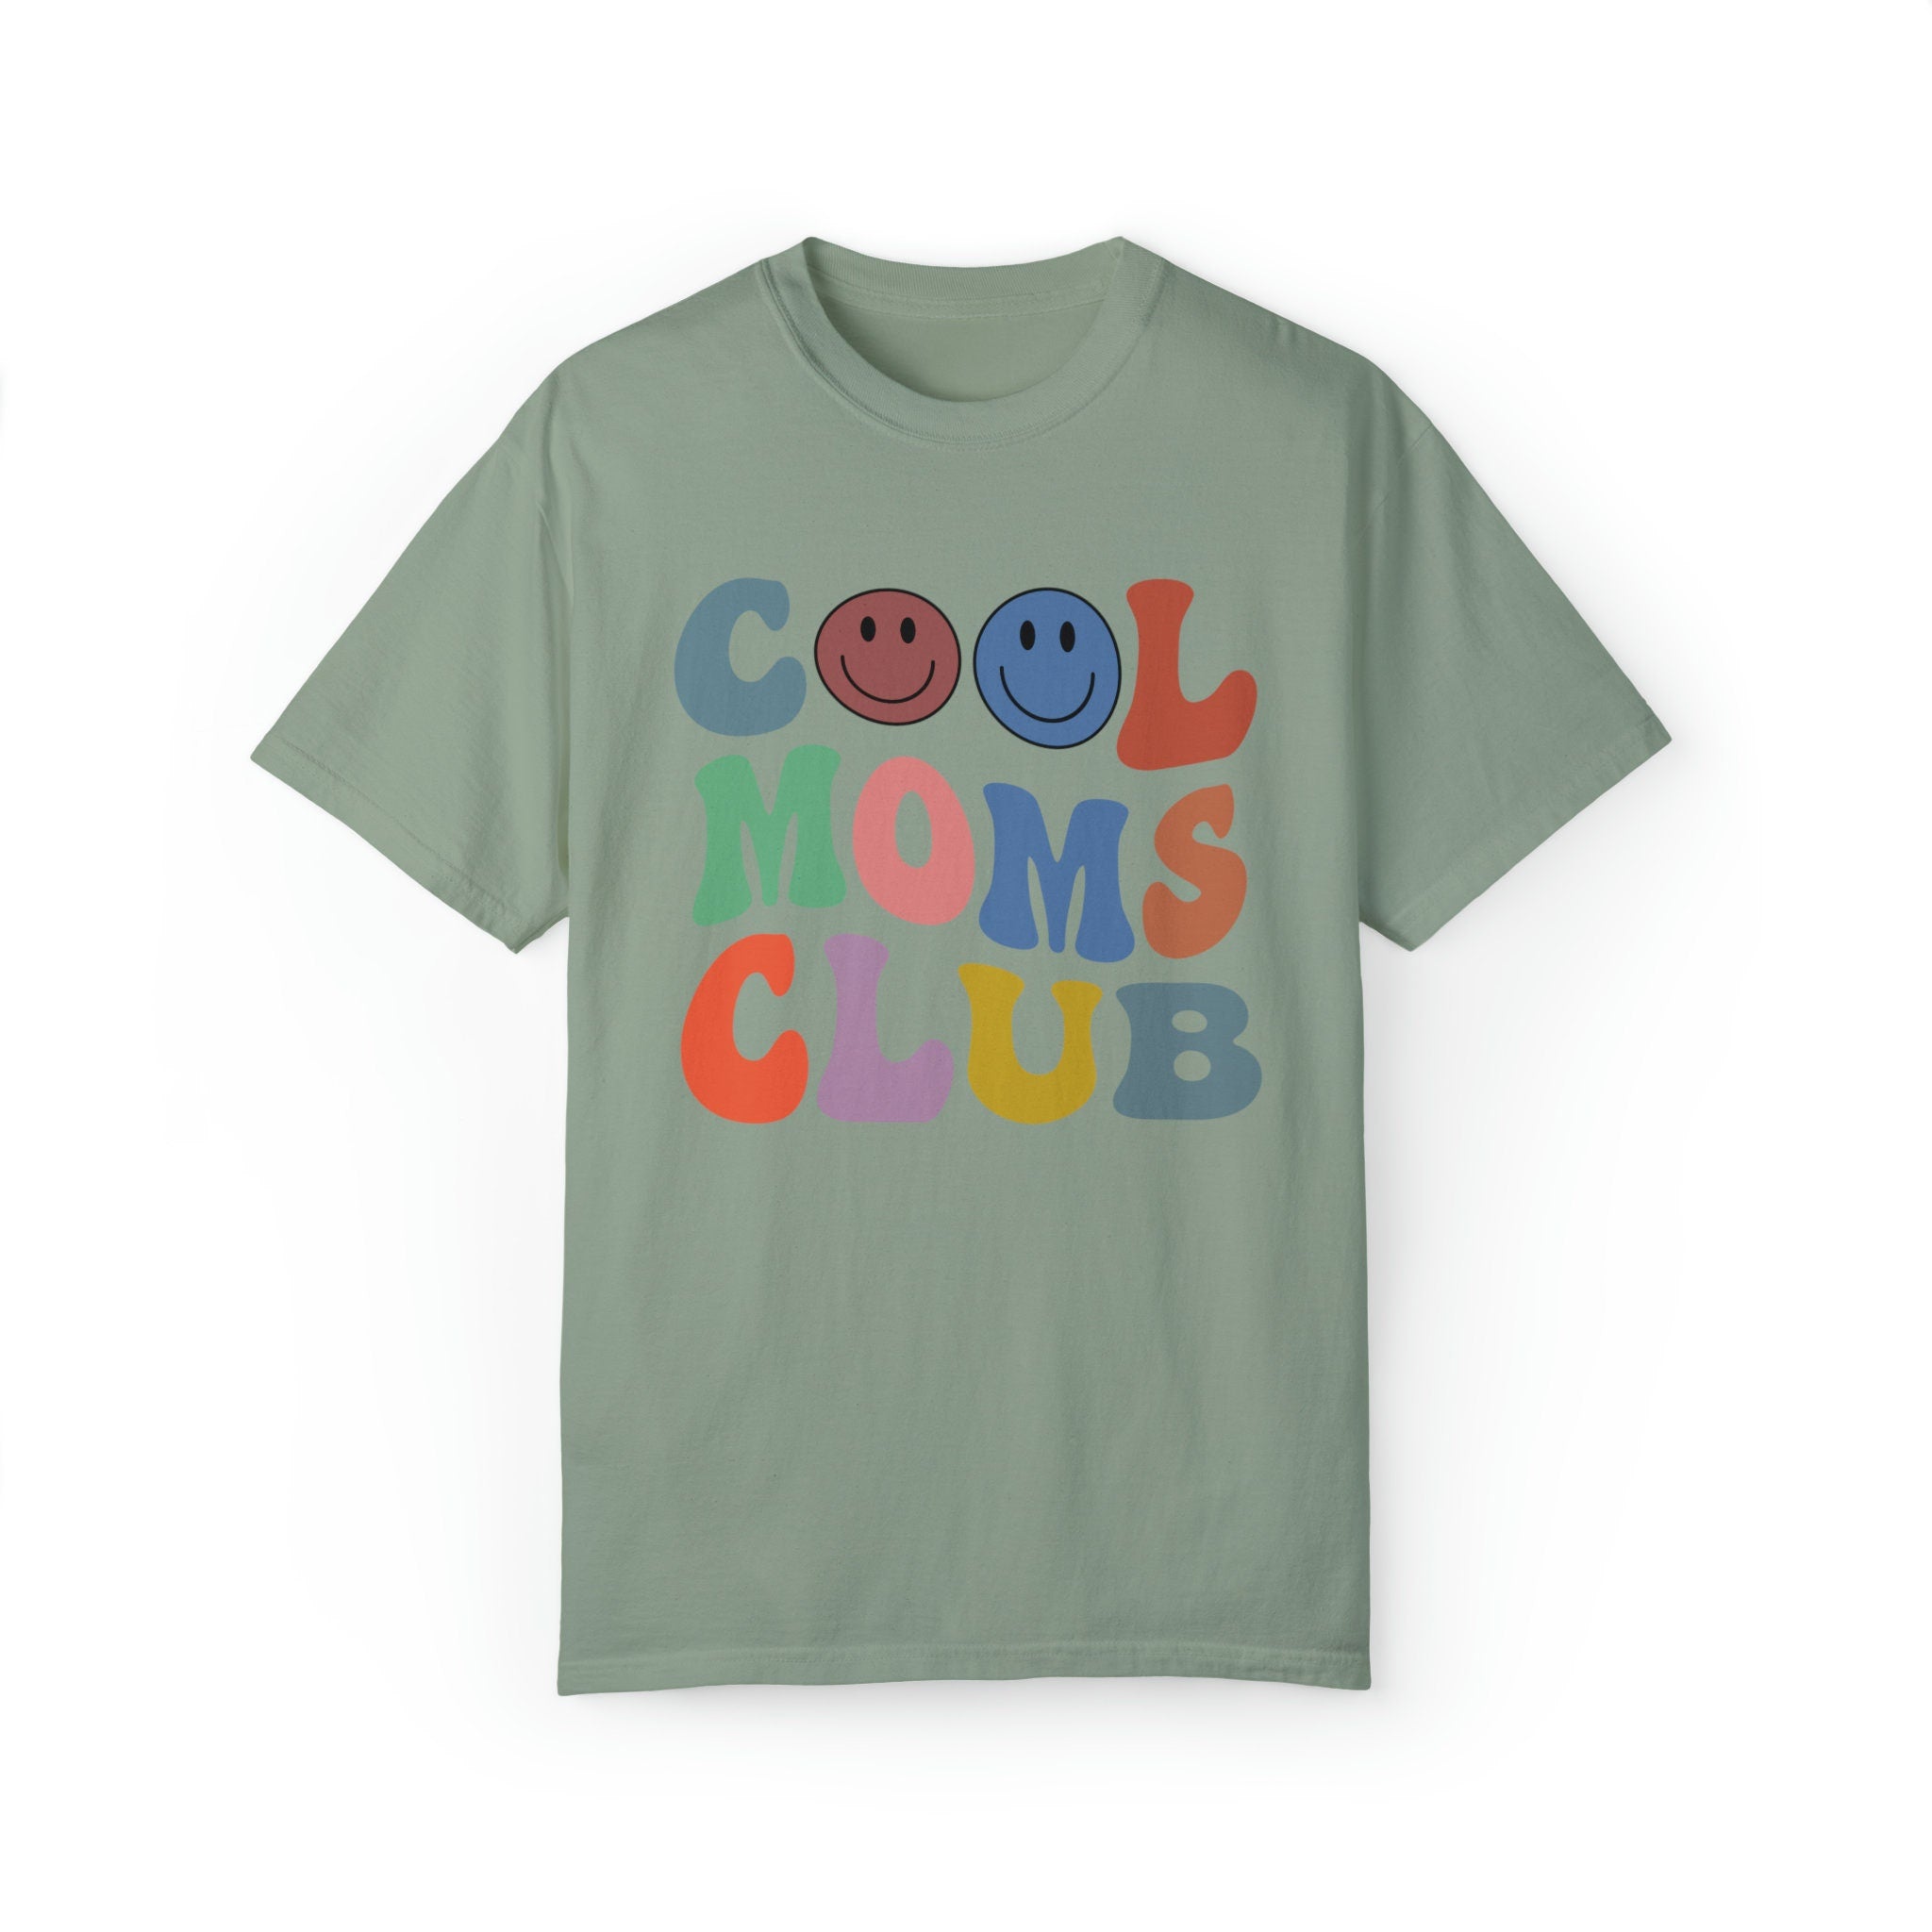 Cool moms gifts, Cool Moms Club Tee shirt, Cool Mom shirt, Cool Mom Club, Retro Vintage Colorful Mom shirt, Mama New Mom Gift, Mom Gift